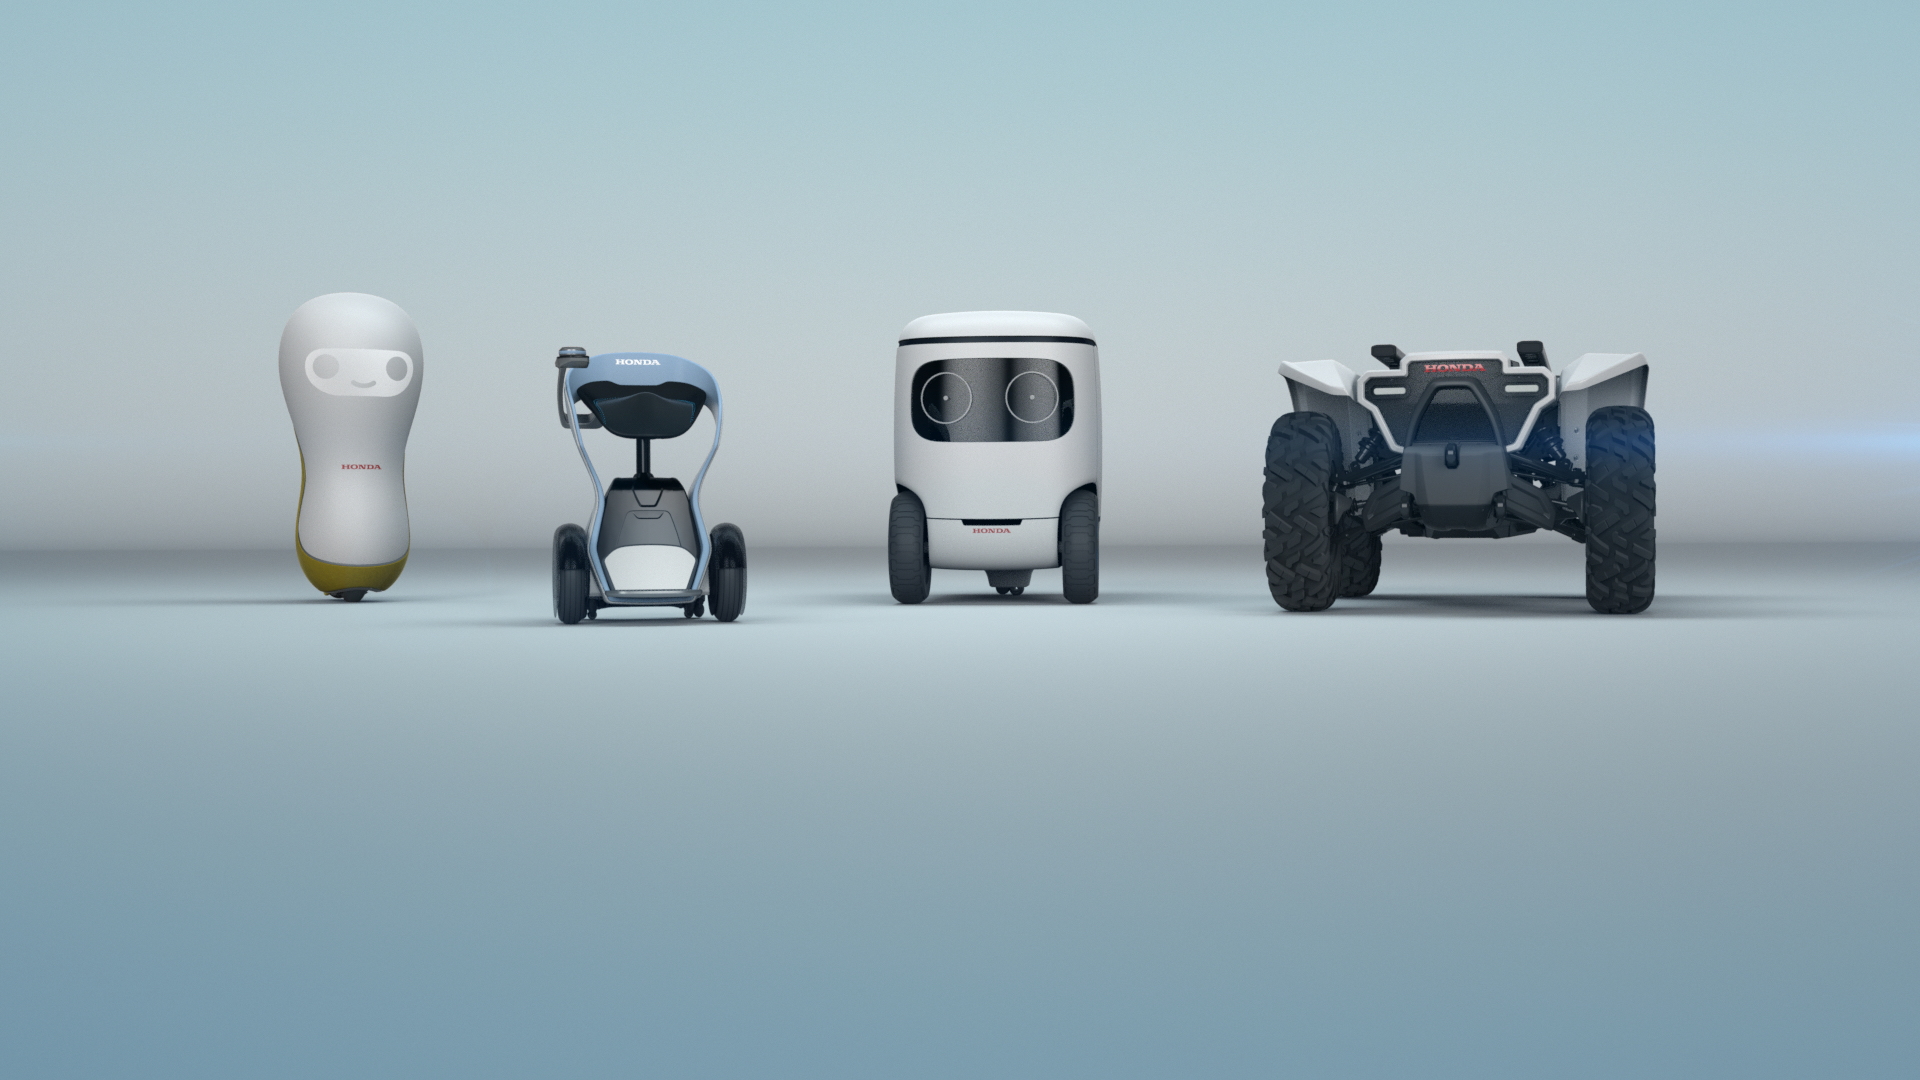 Honda 3E robot concepts for 2018 CES